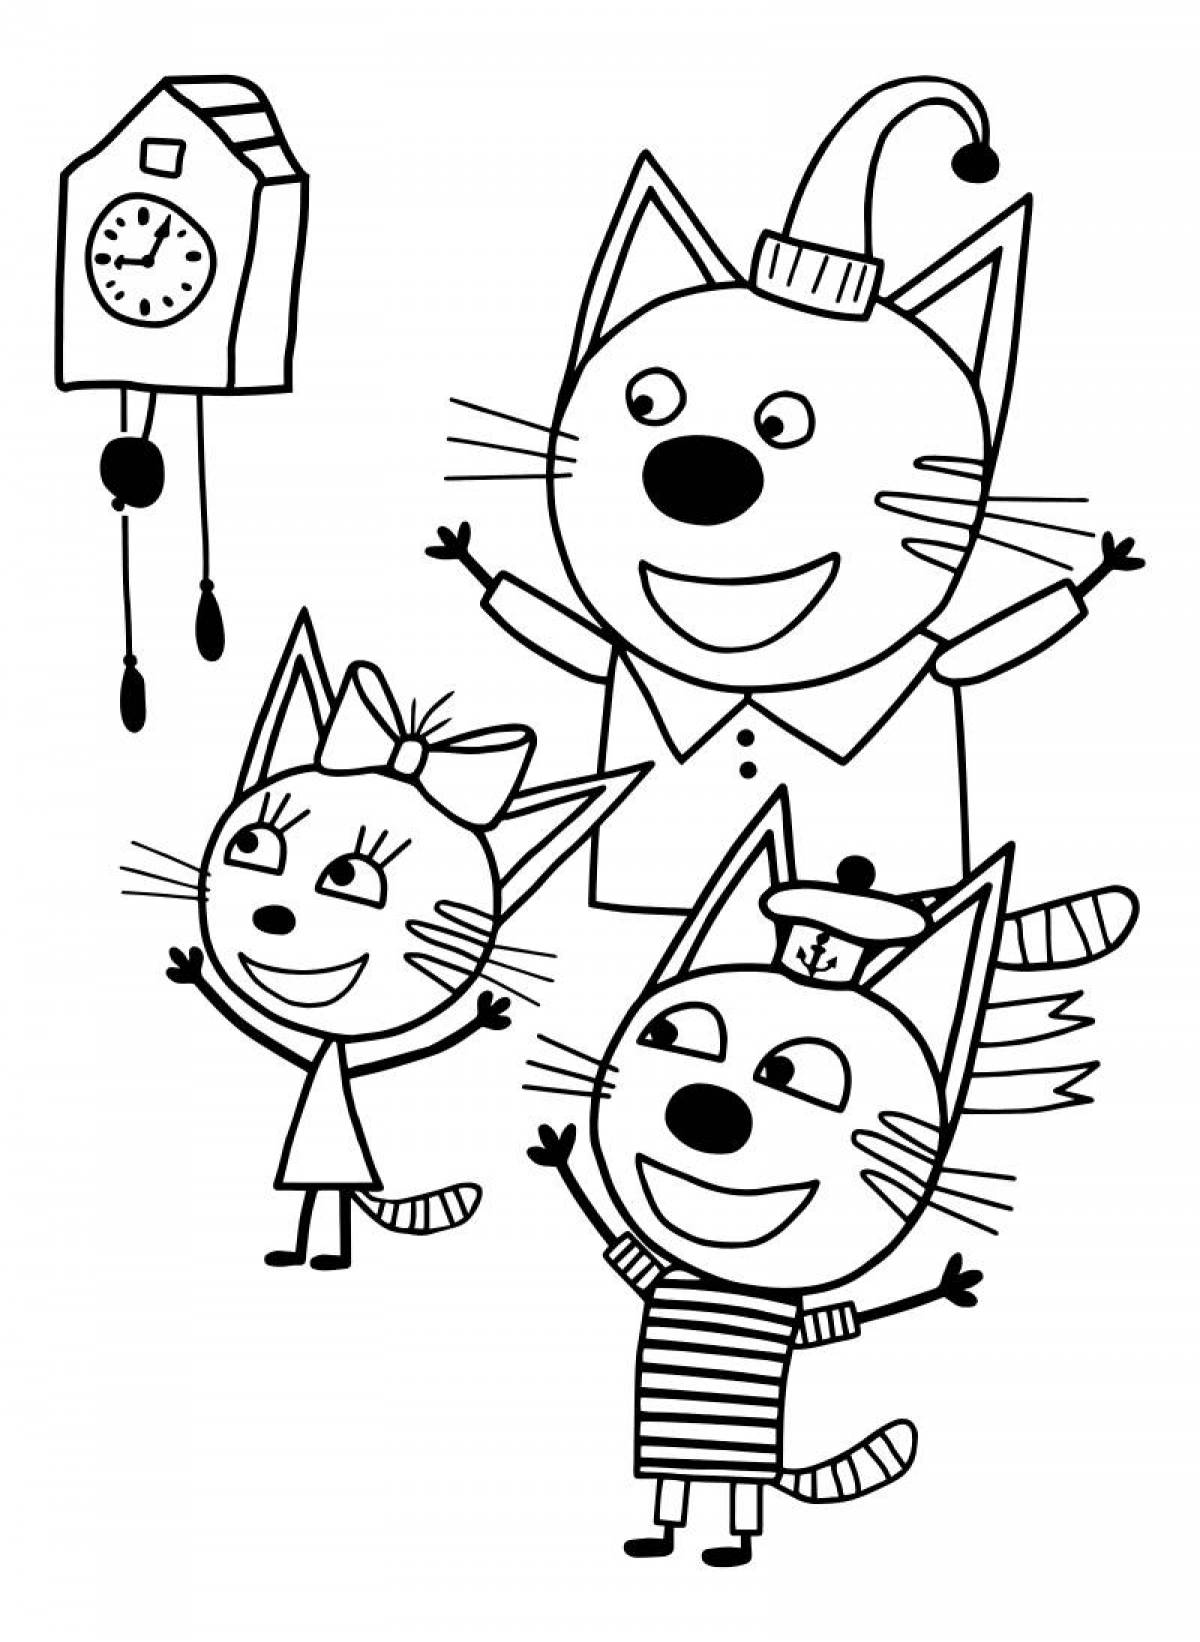 Joyous 3 cats coloring book for preschoolers